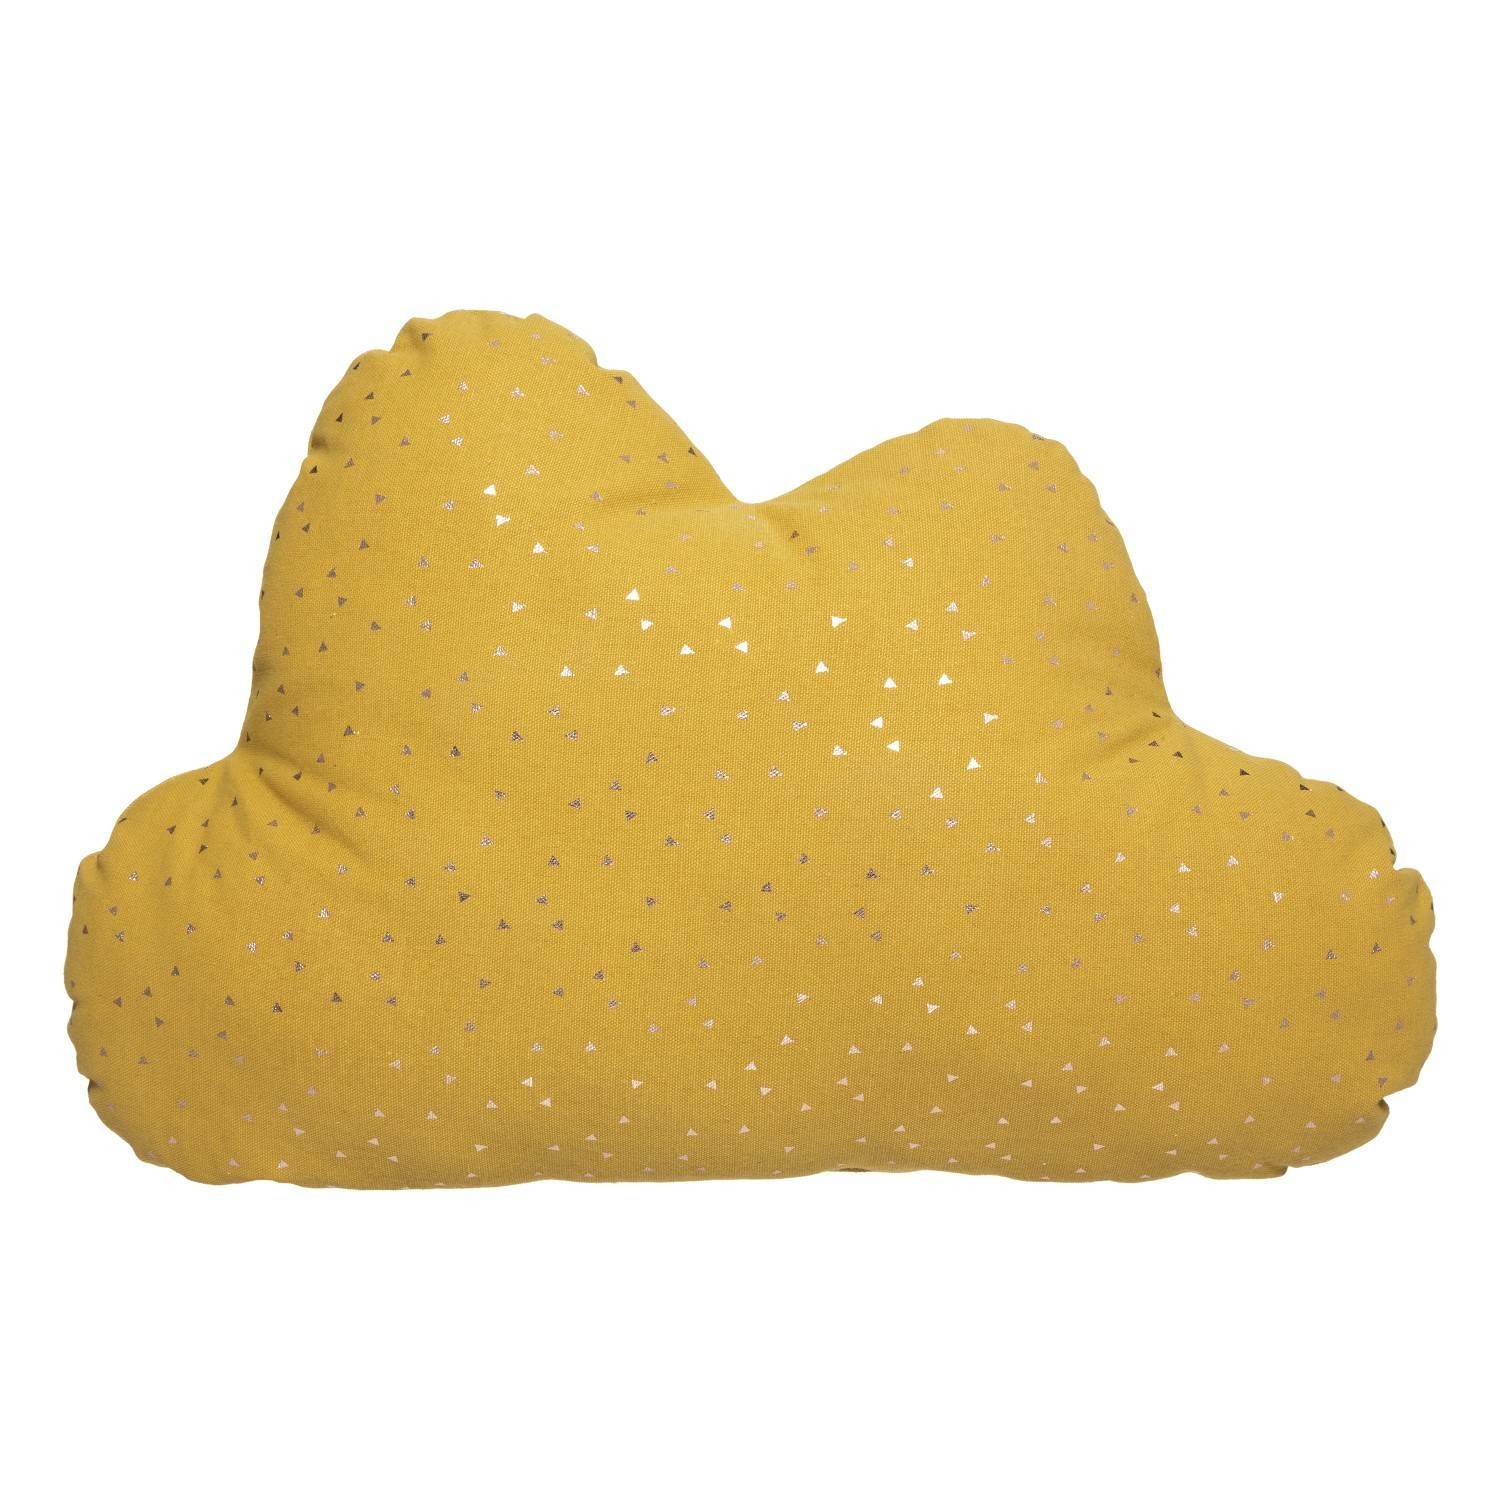 Atmosphera for kids Dekorační polštář ve tvaru obláčku, žlutá, bavlna, 28 x 45 cm - EDAXO.CZ s.r.o.